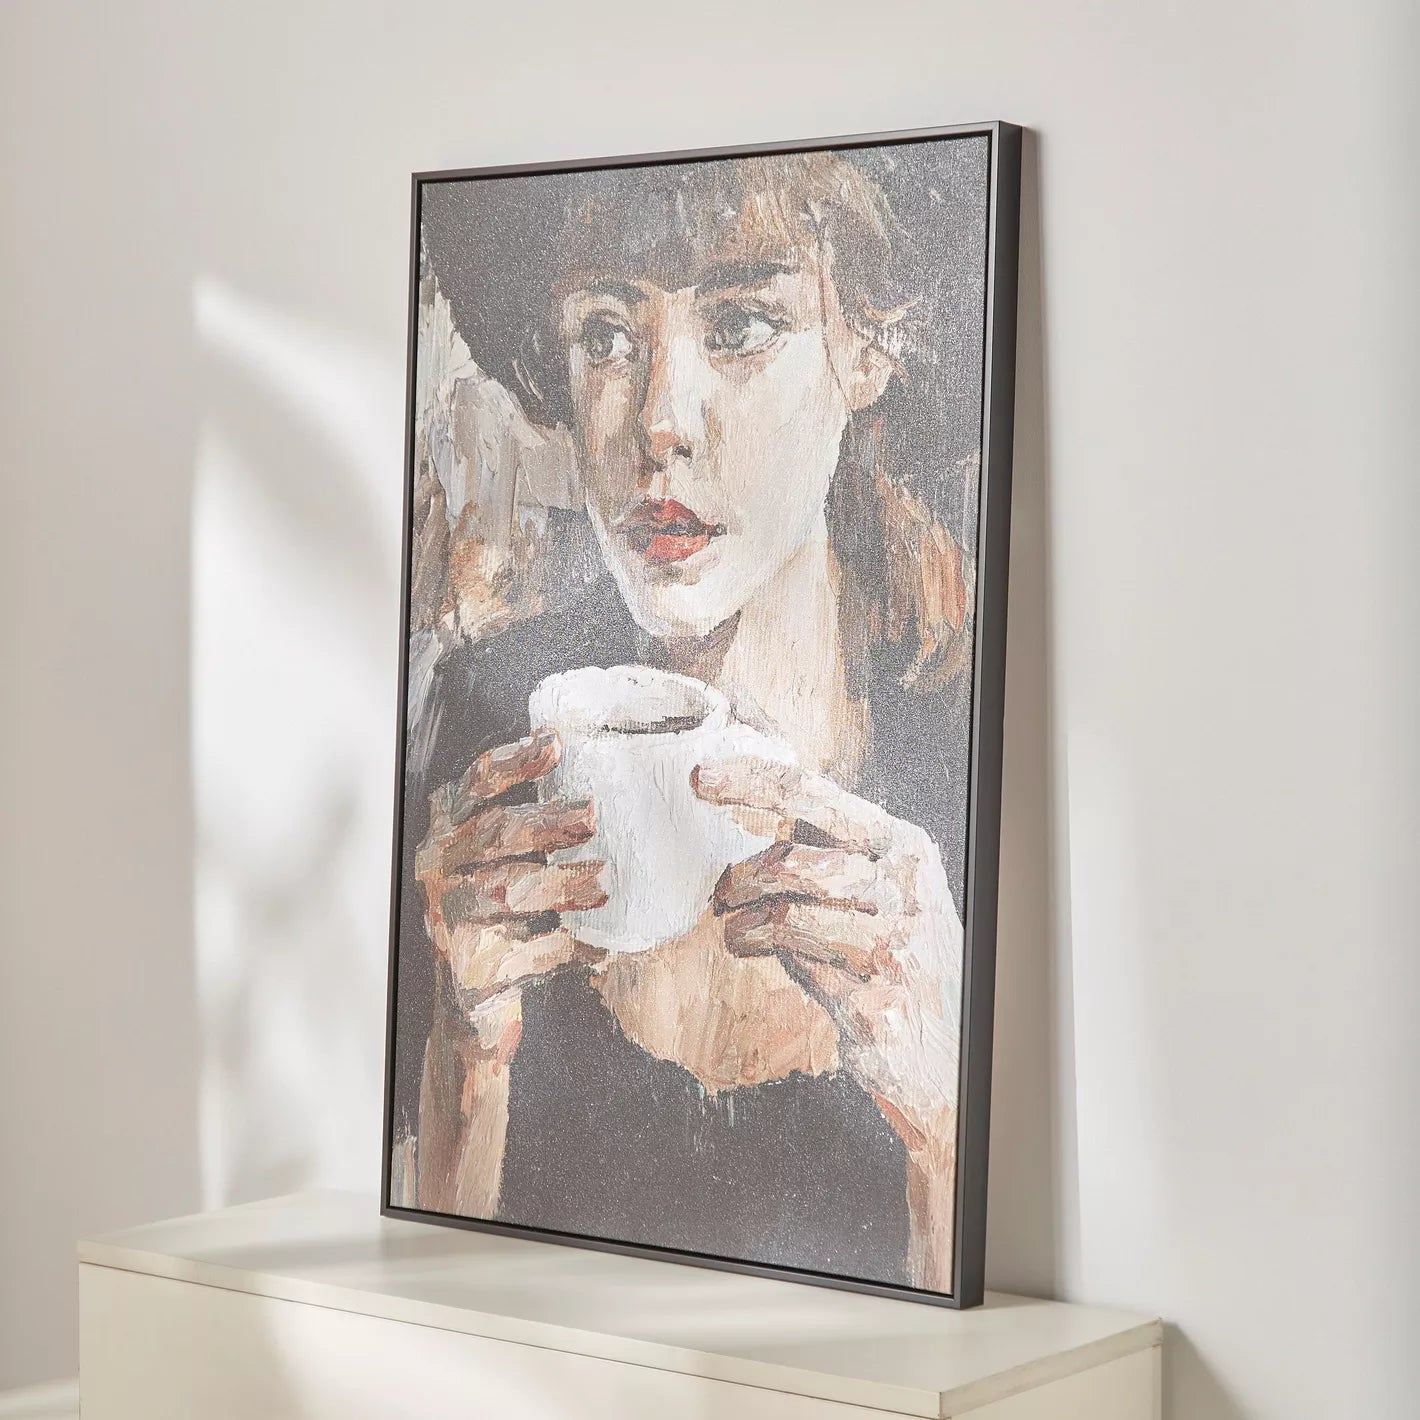 Lady in Black Printed Artworks Framed Canvas Wall Art - 83x123 cm